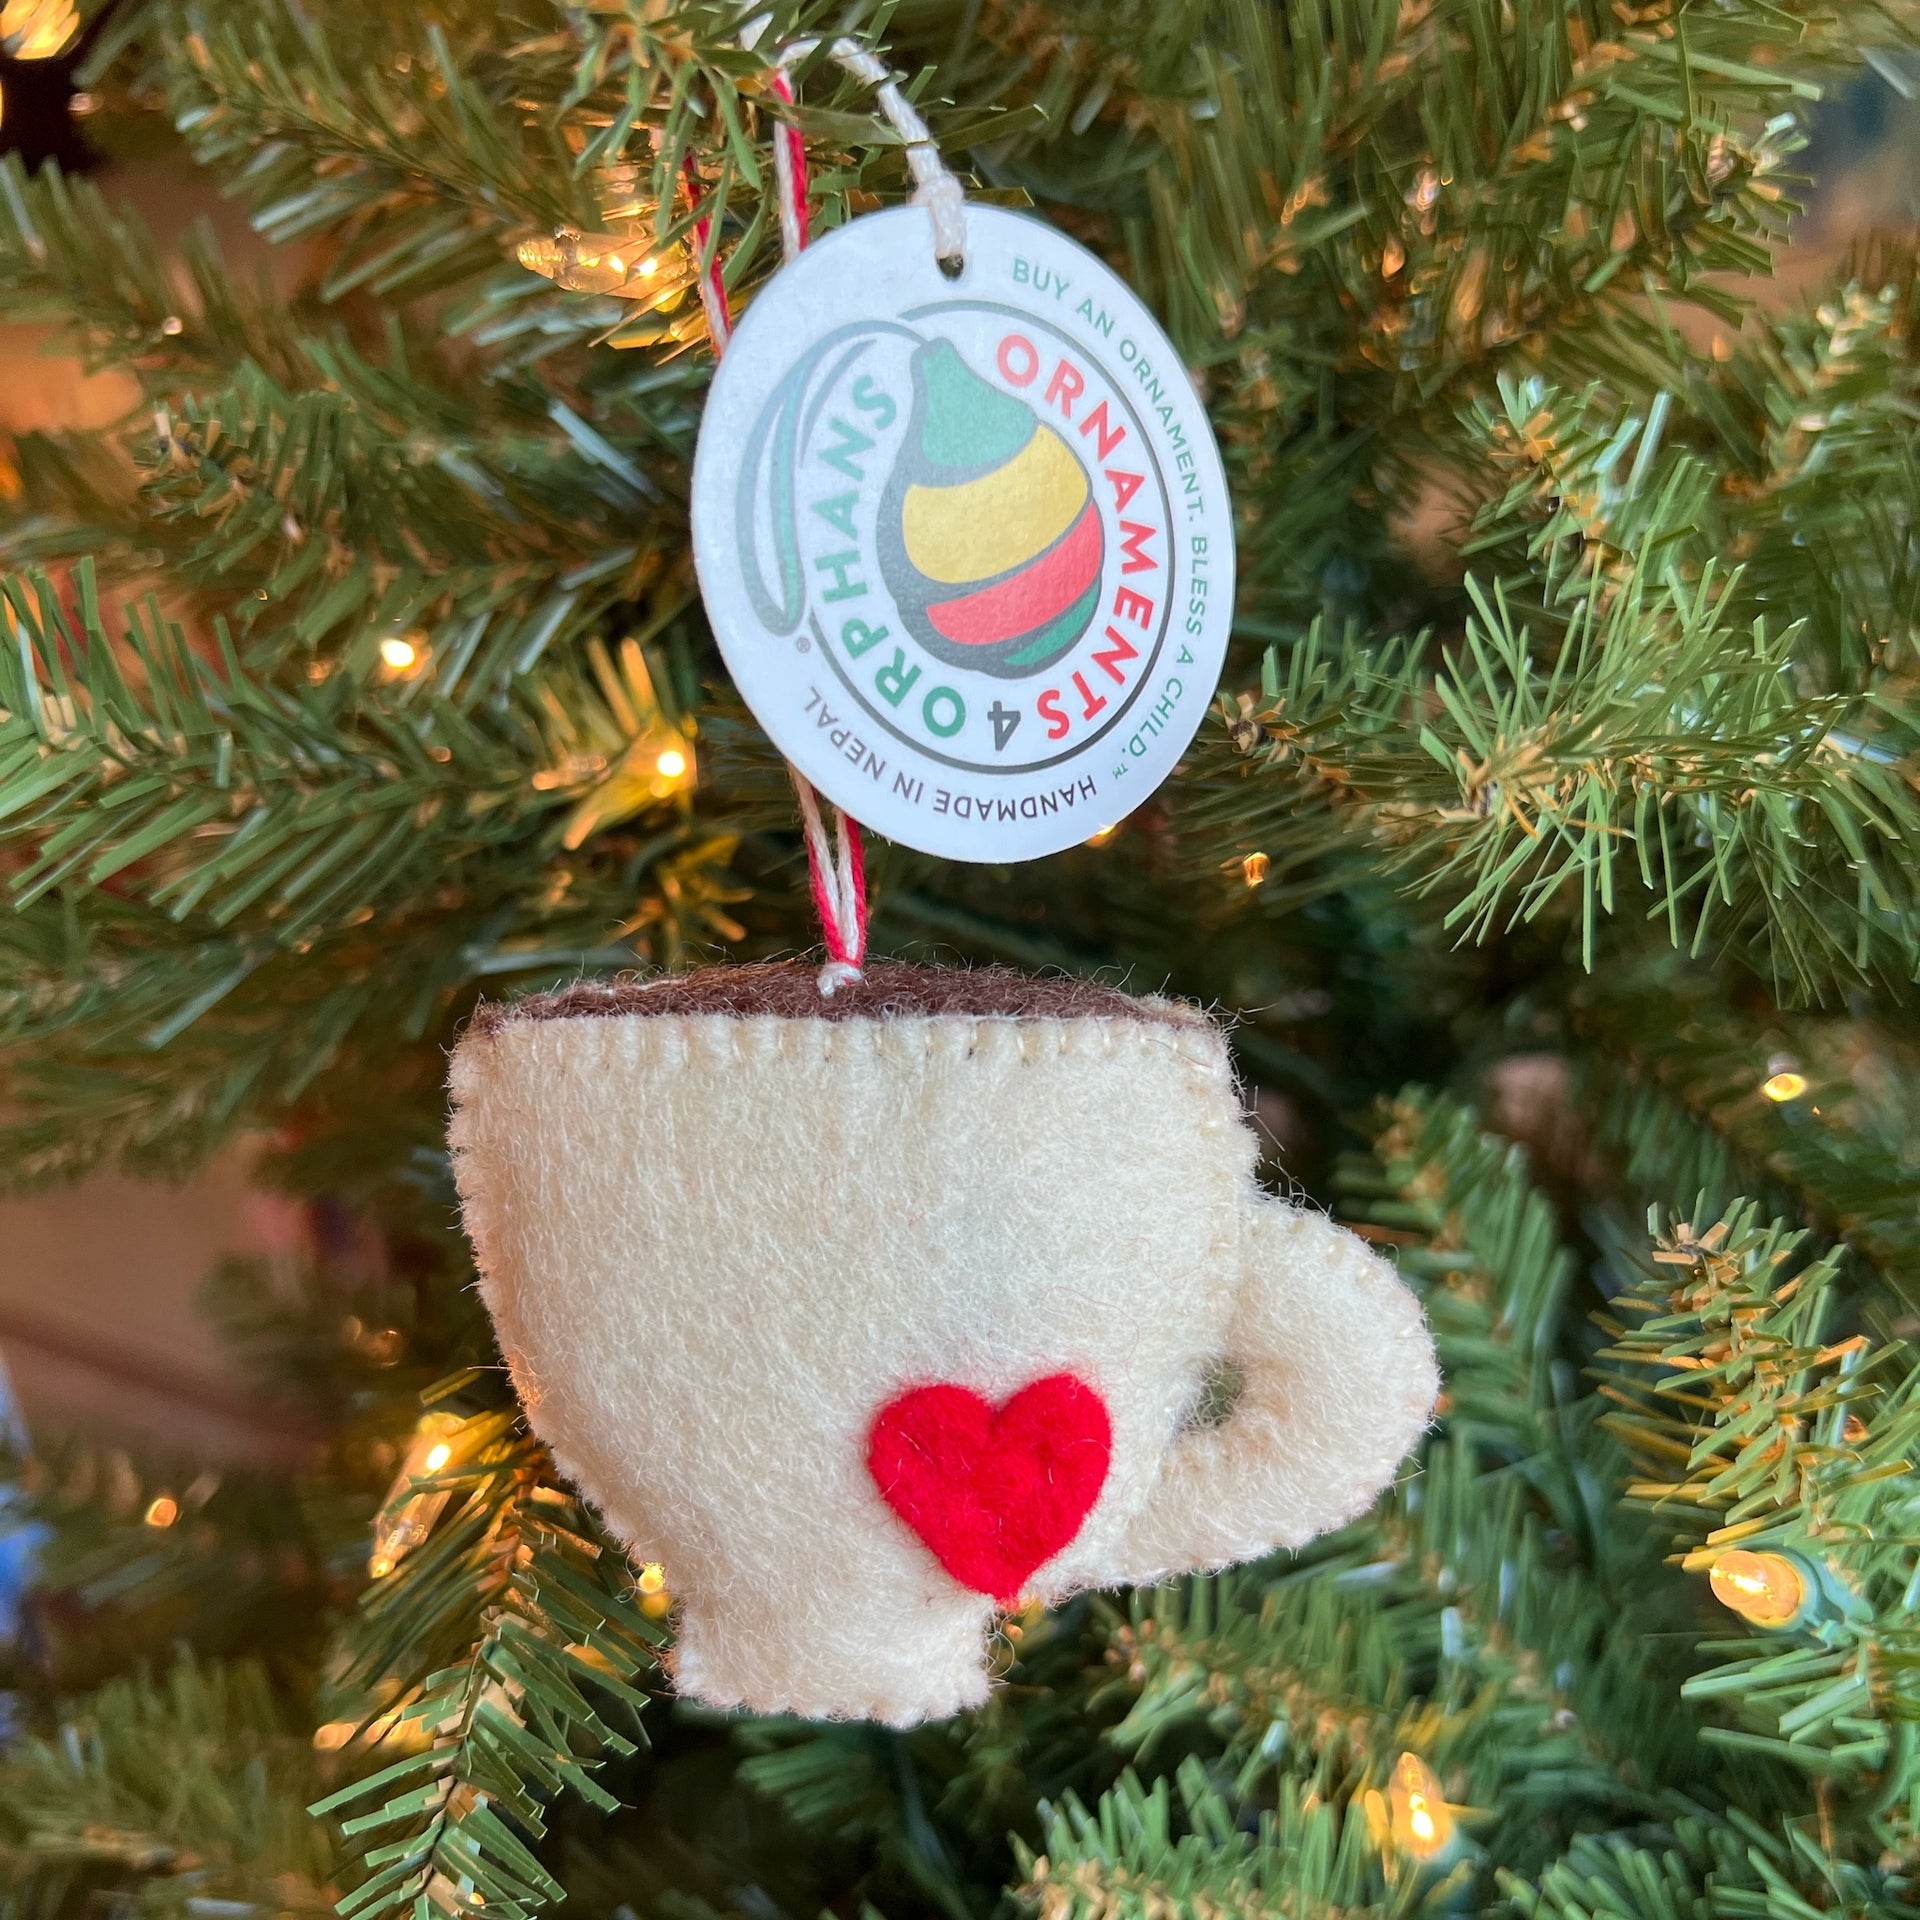 felt latte ornament hanging on a Christmas tree